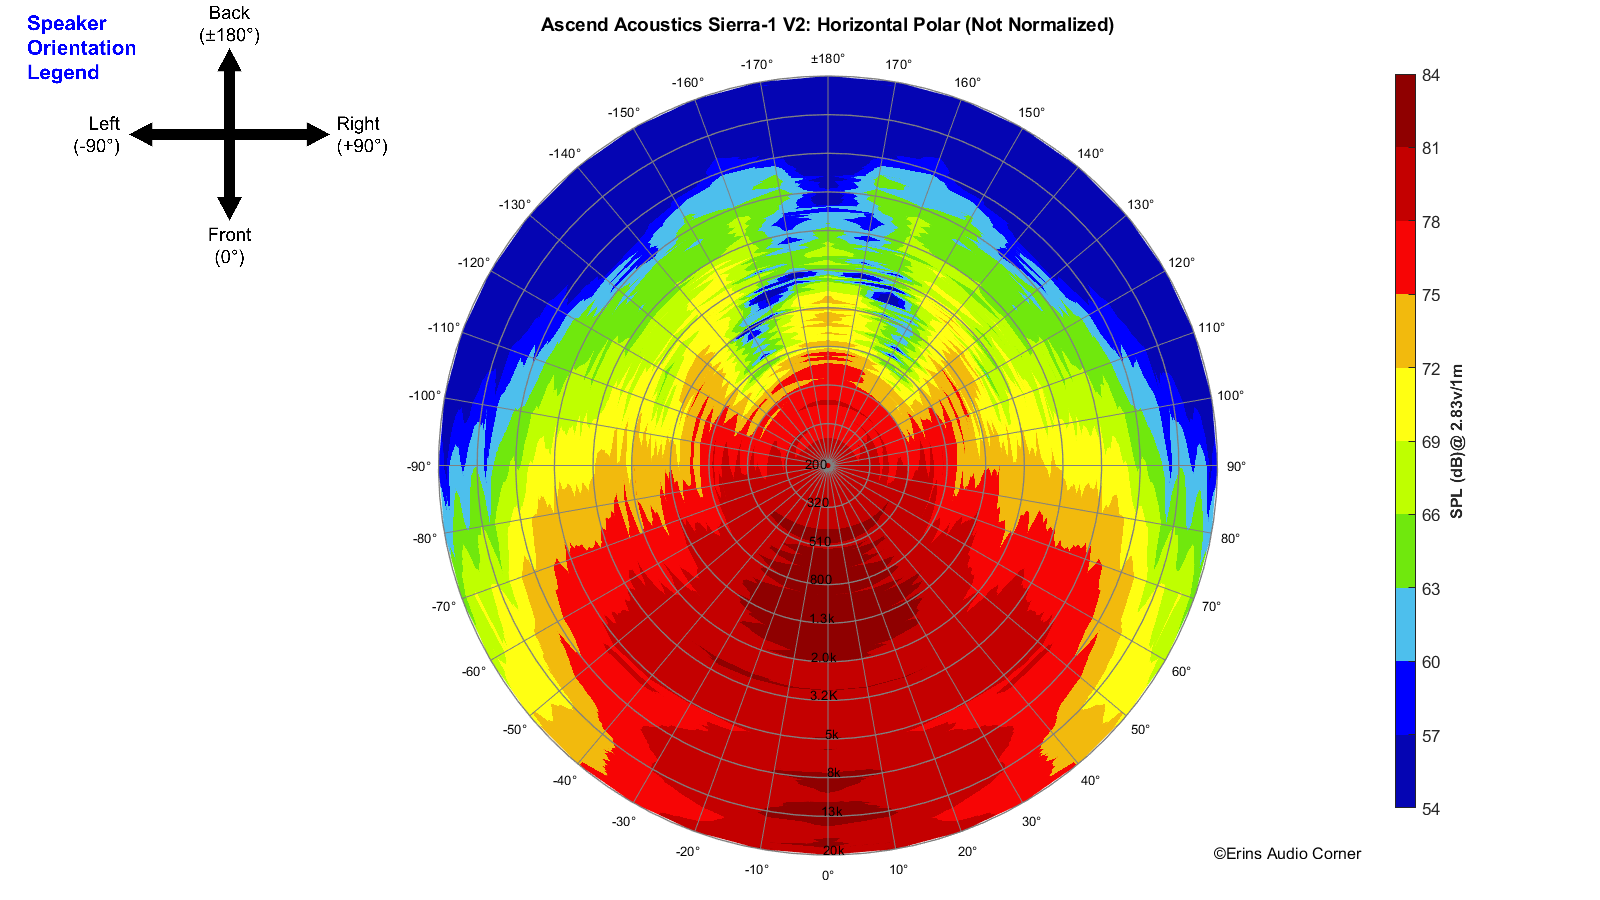 Ascend-Acoustics-Sierra-1-V2_360_Horizontal_Polar.png